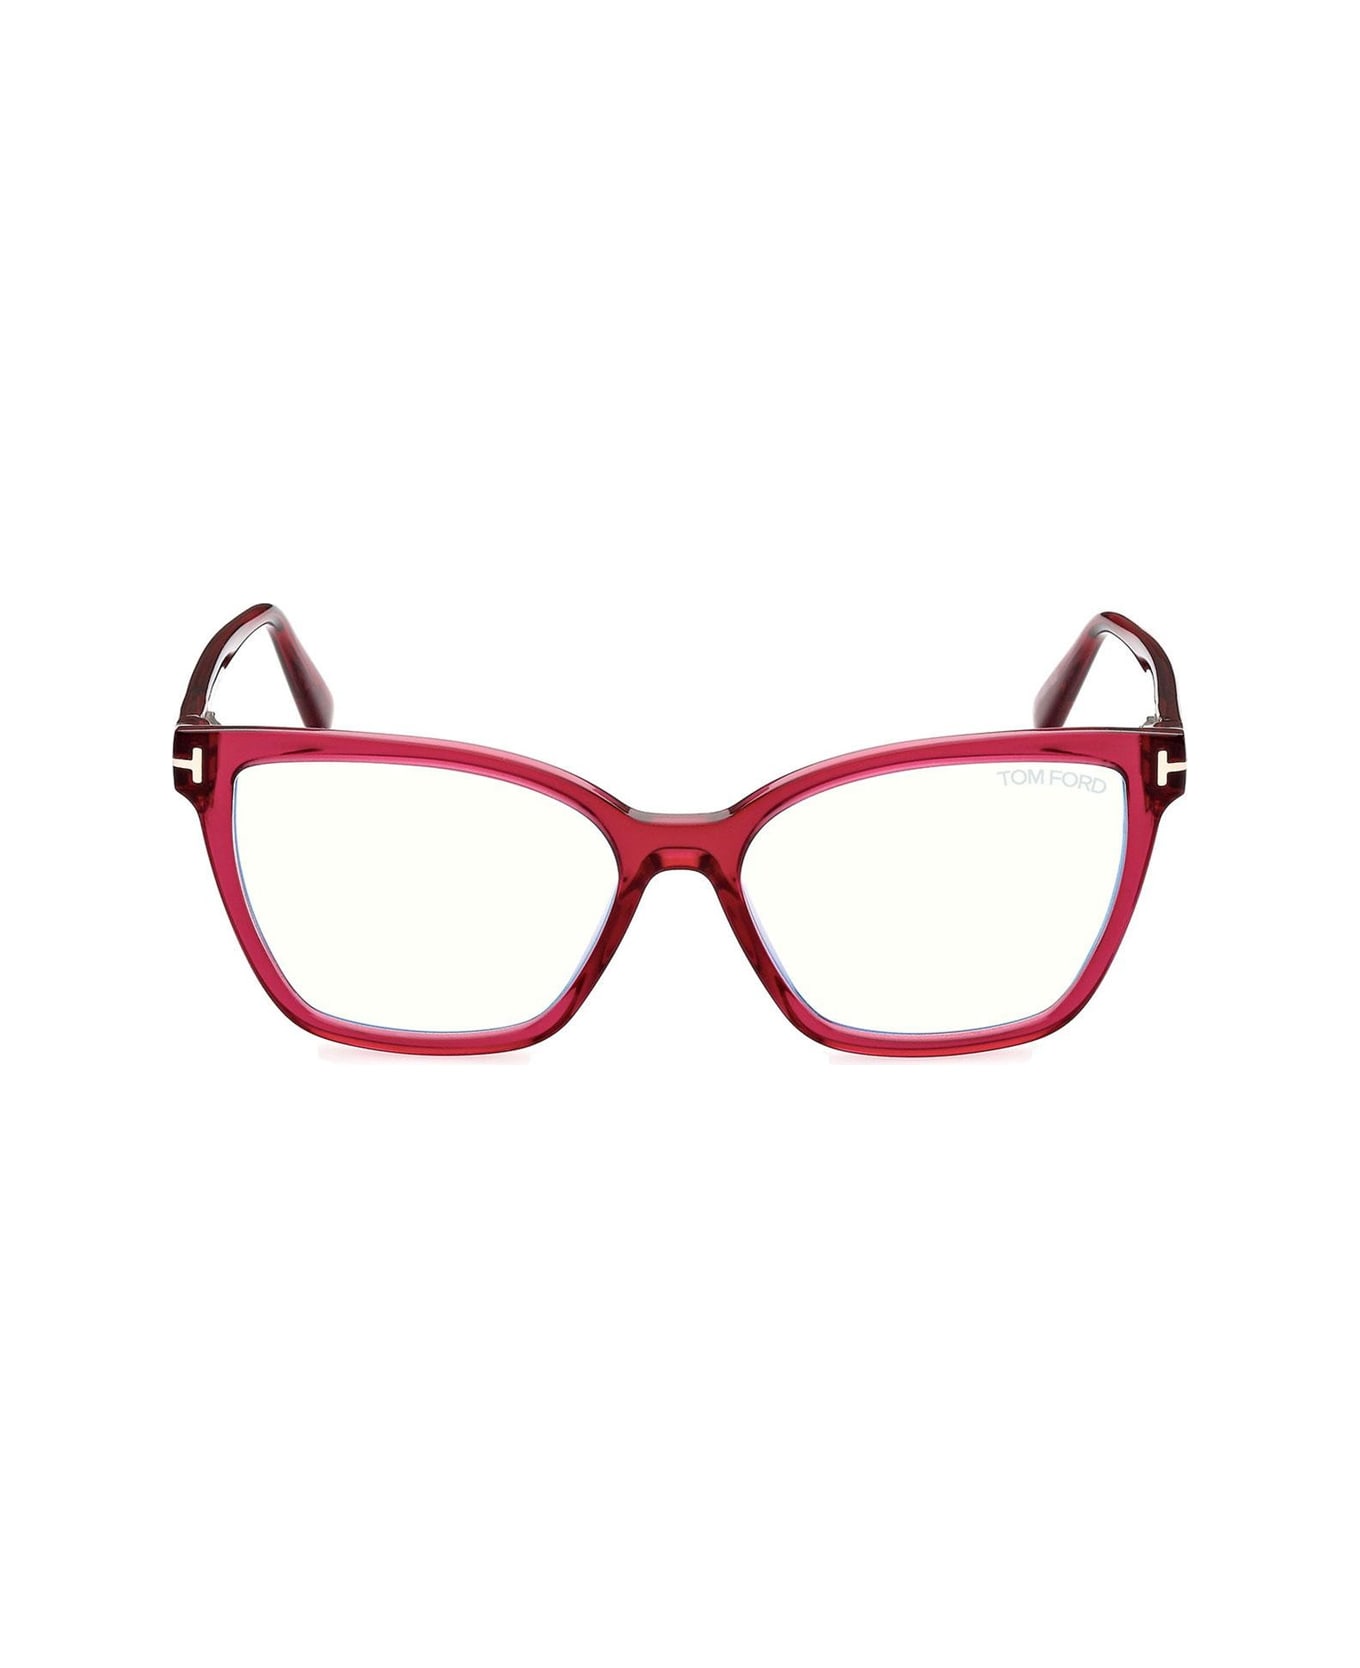 Tom Ford Eyewear Ft5812 074 Glasses - Rosa アイウェア